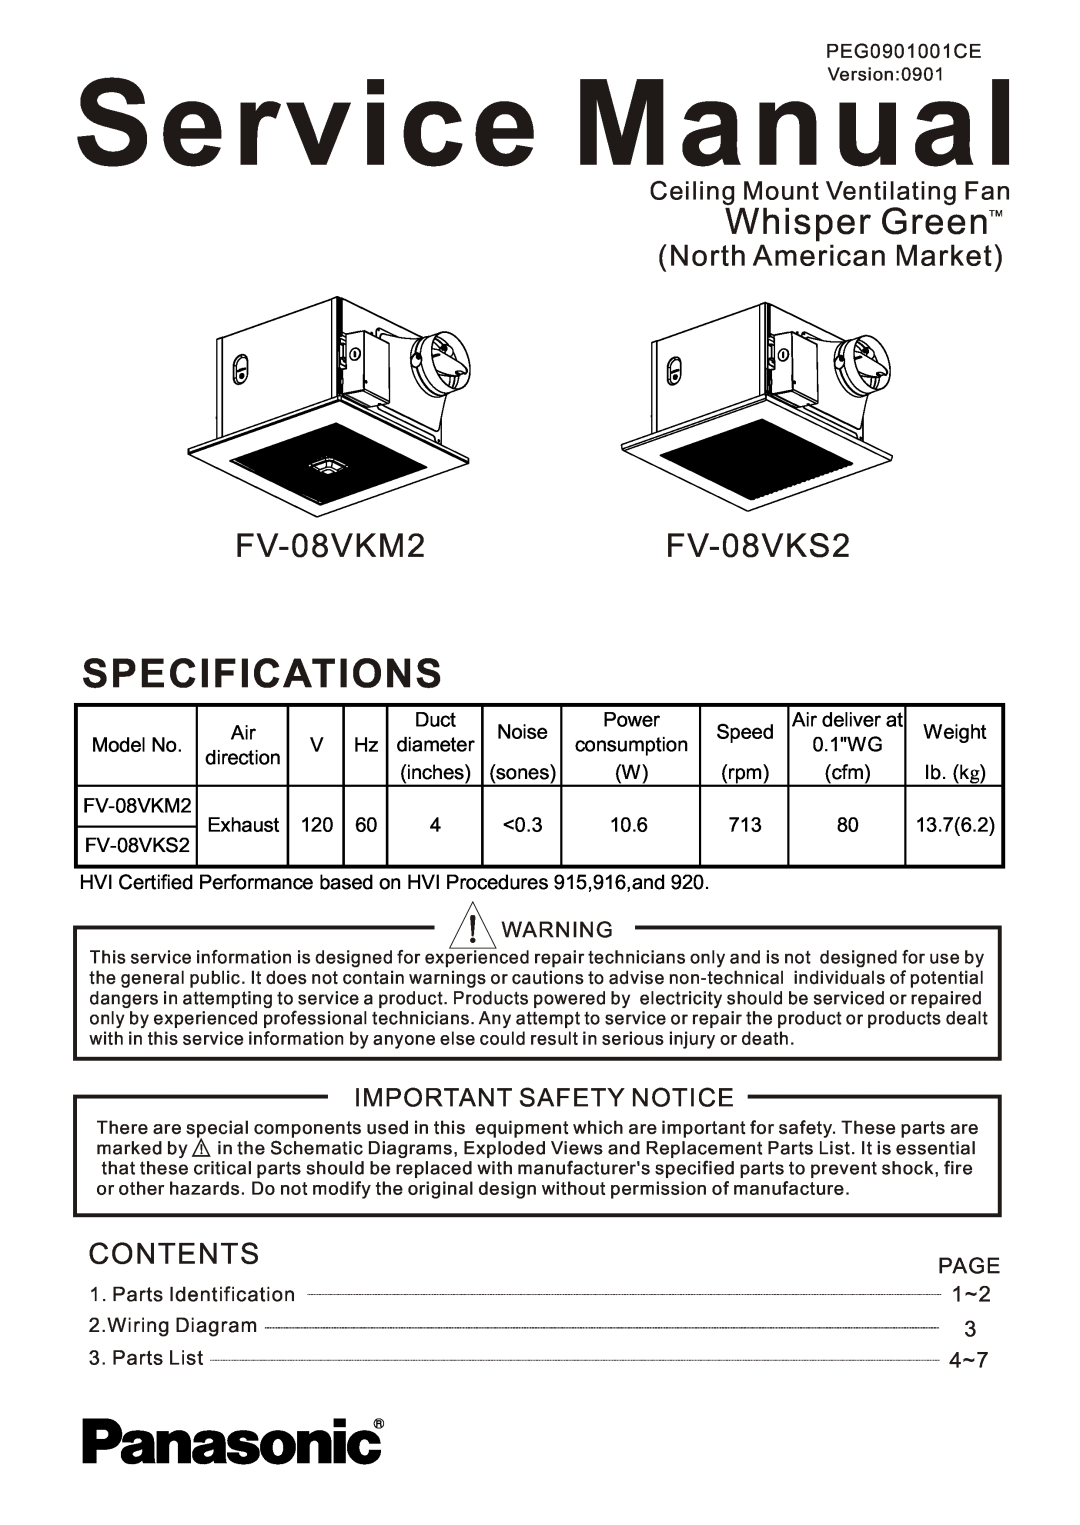 Panasonic service manual FV-08VKM2FV-08VKS2, Specifications, Whisper GreenTM, North American Market, Contents, Page 